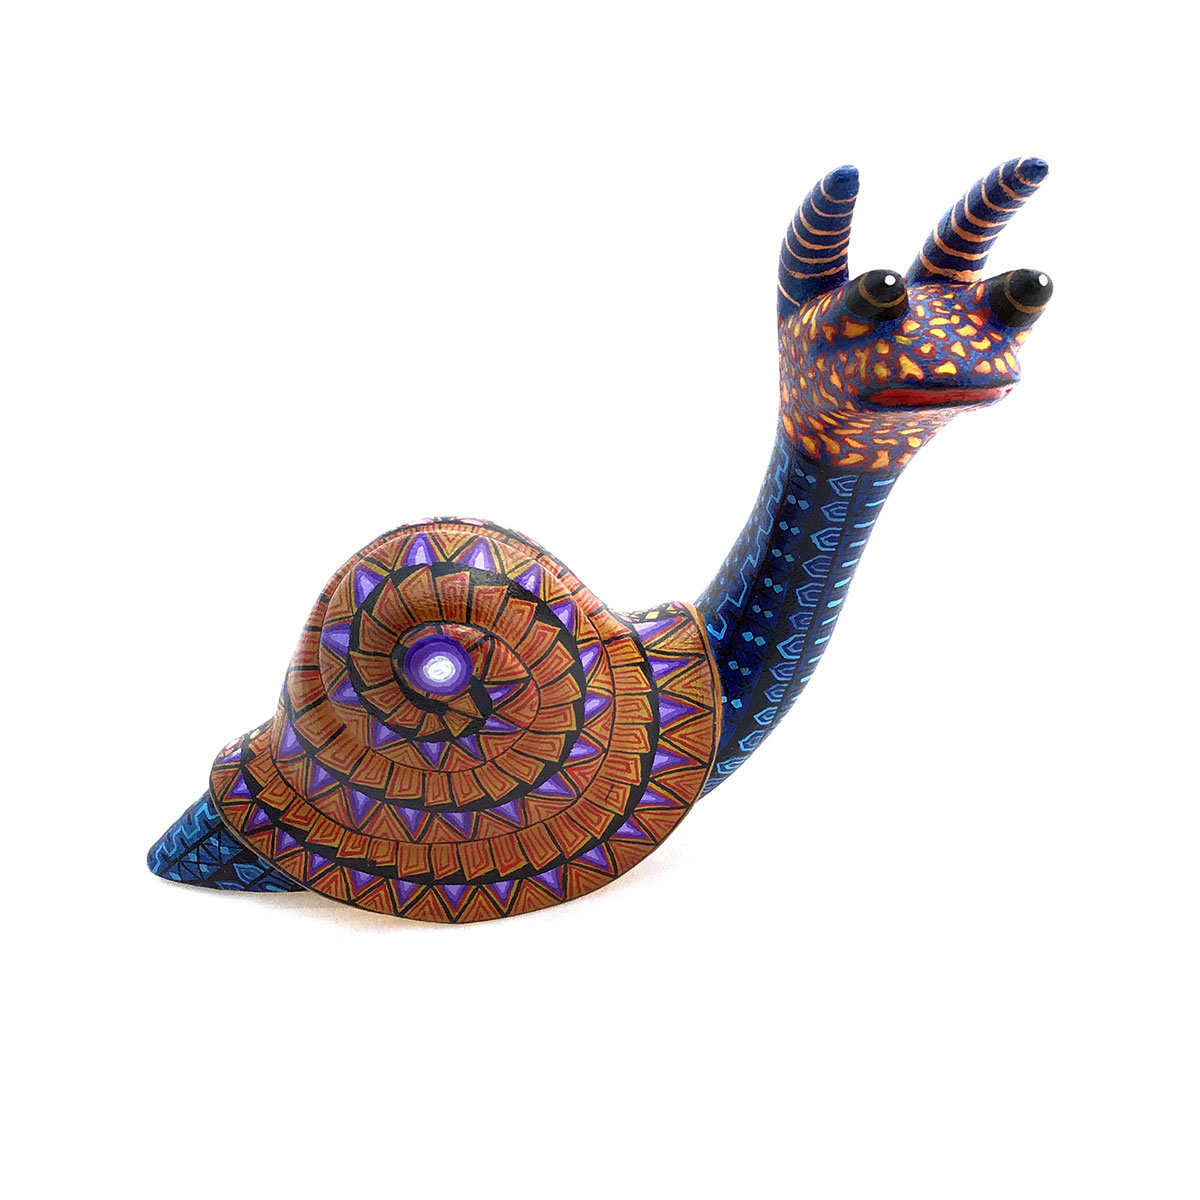 Esmeralda Cruz Sosa Esmeralda Cruz Sosa: Snail shelled gastropod